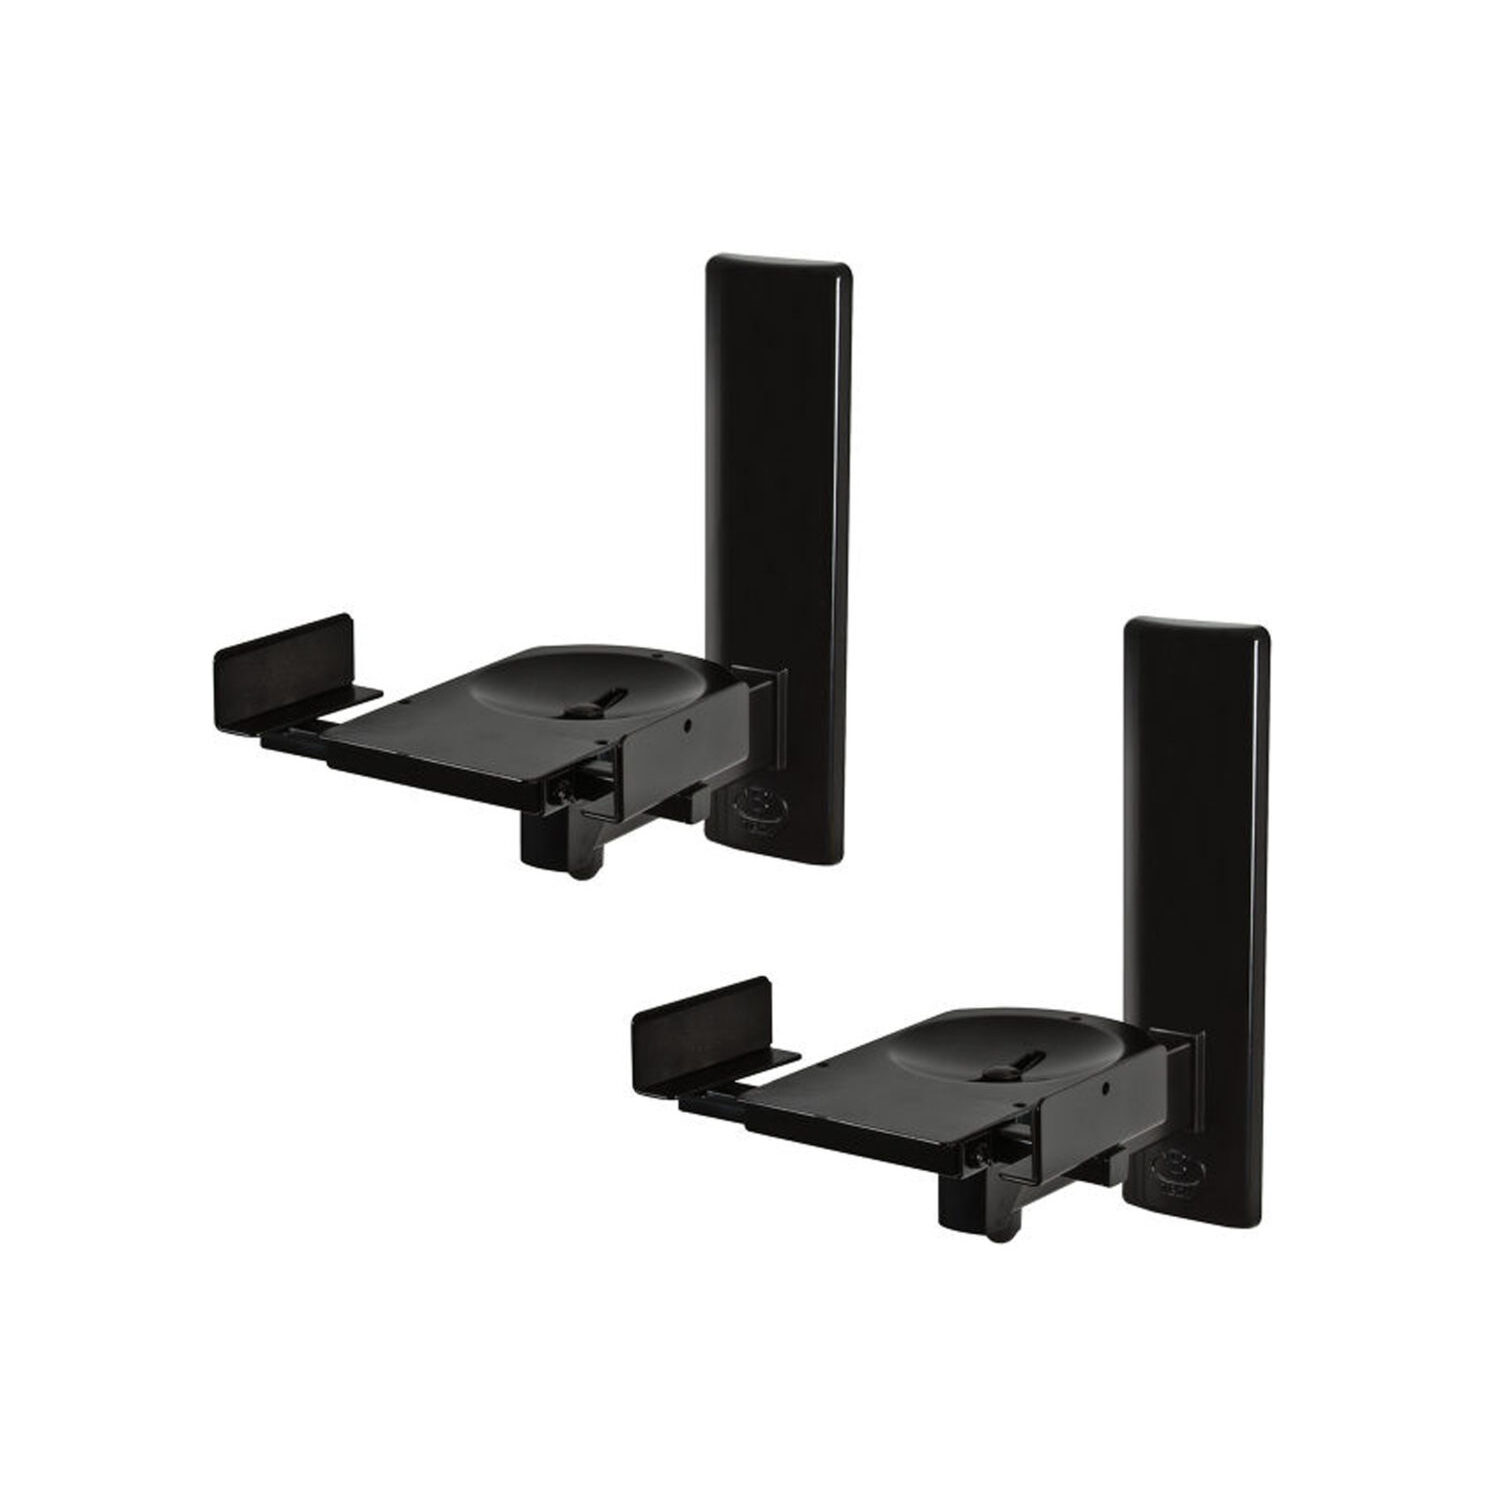 Rocelco B-Tech Ultra Grip-Pro Speaker Mount in Black Finish (Set of 2) - image 1 of 4